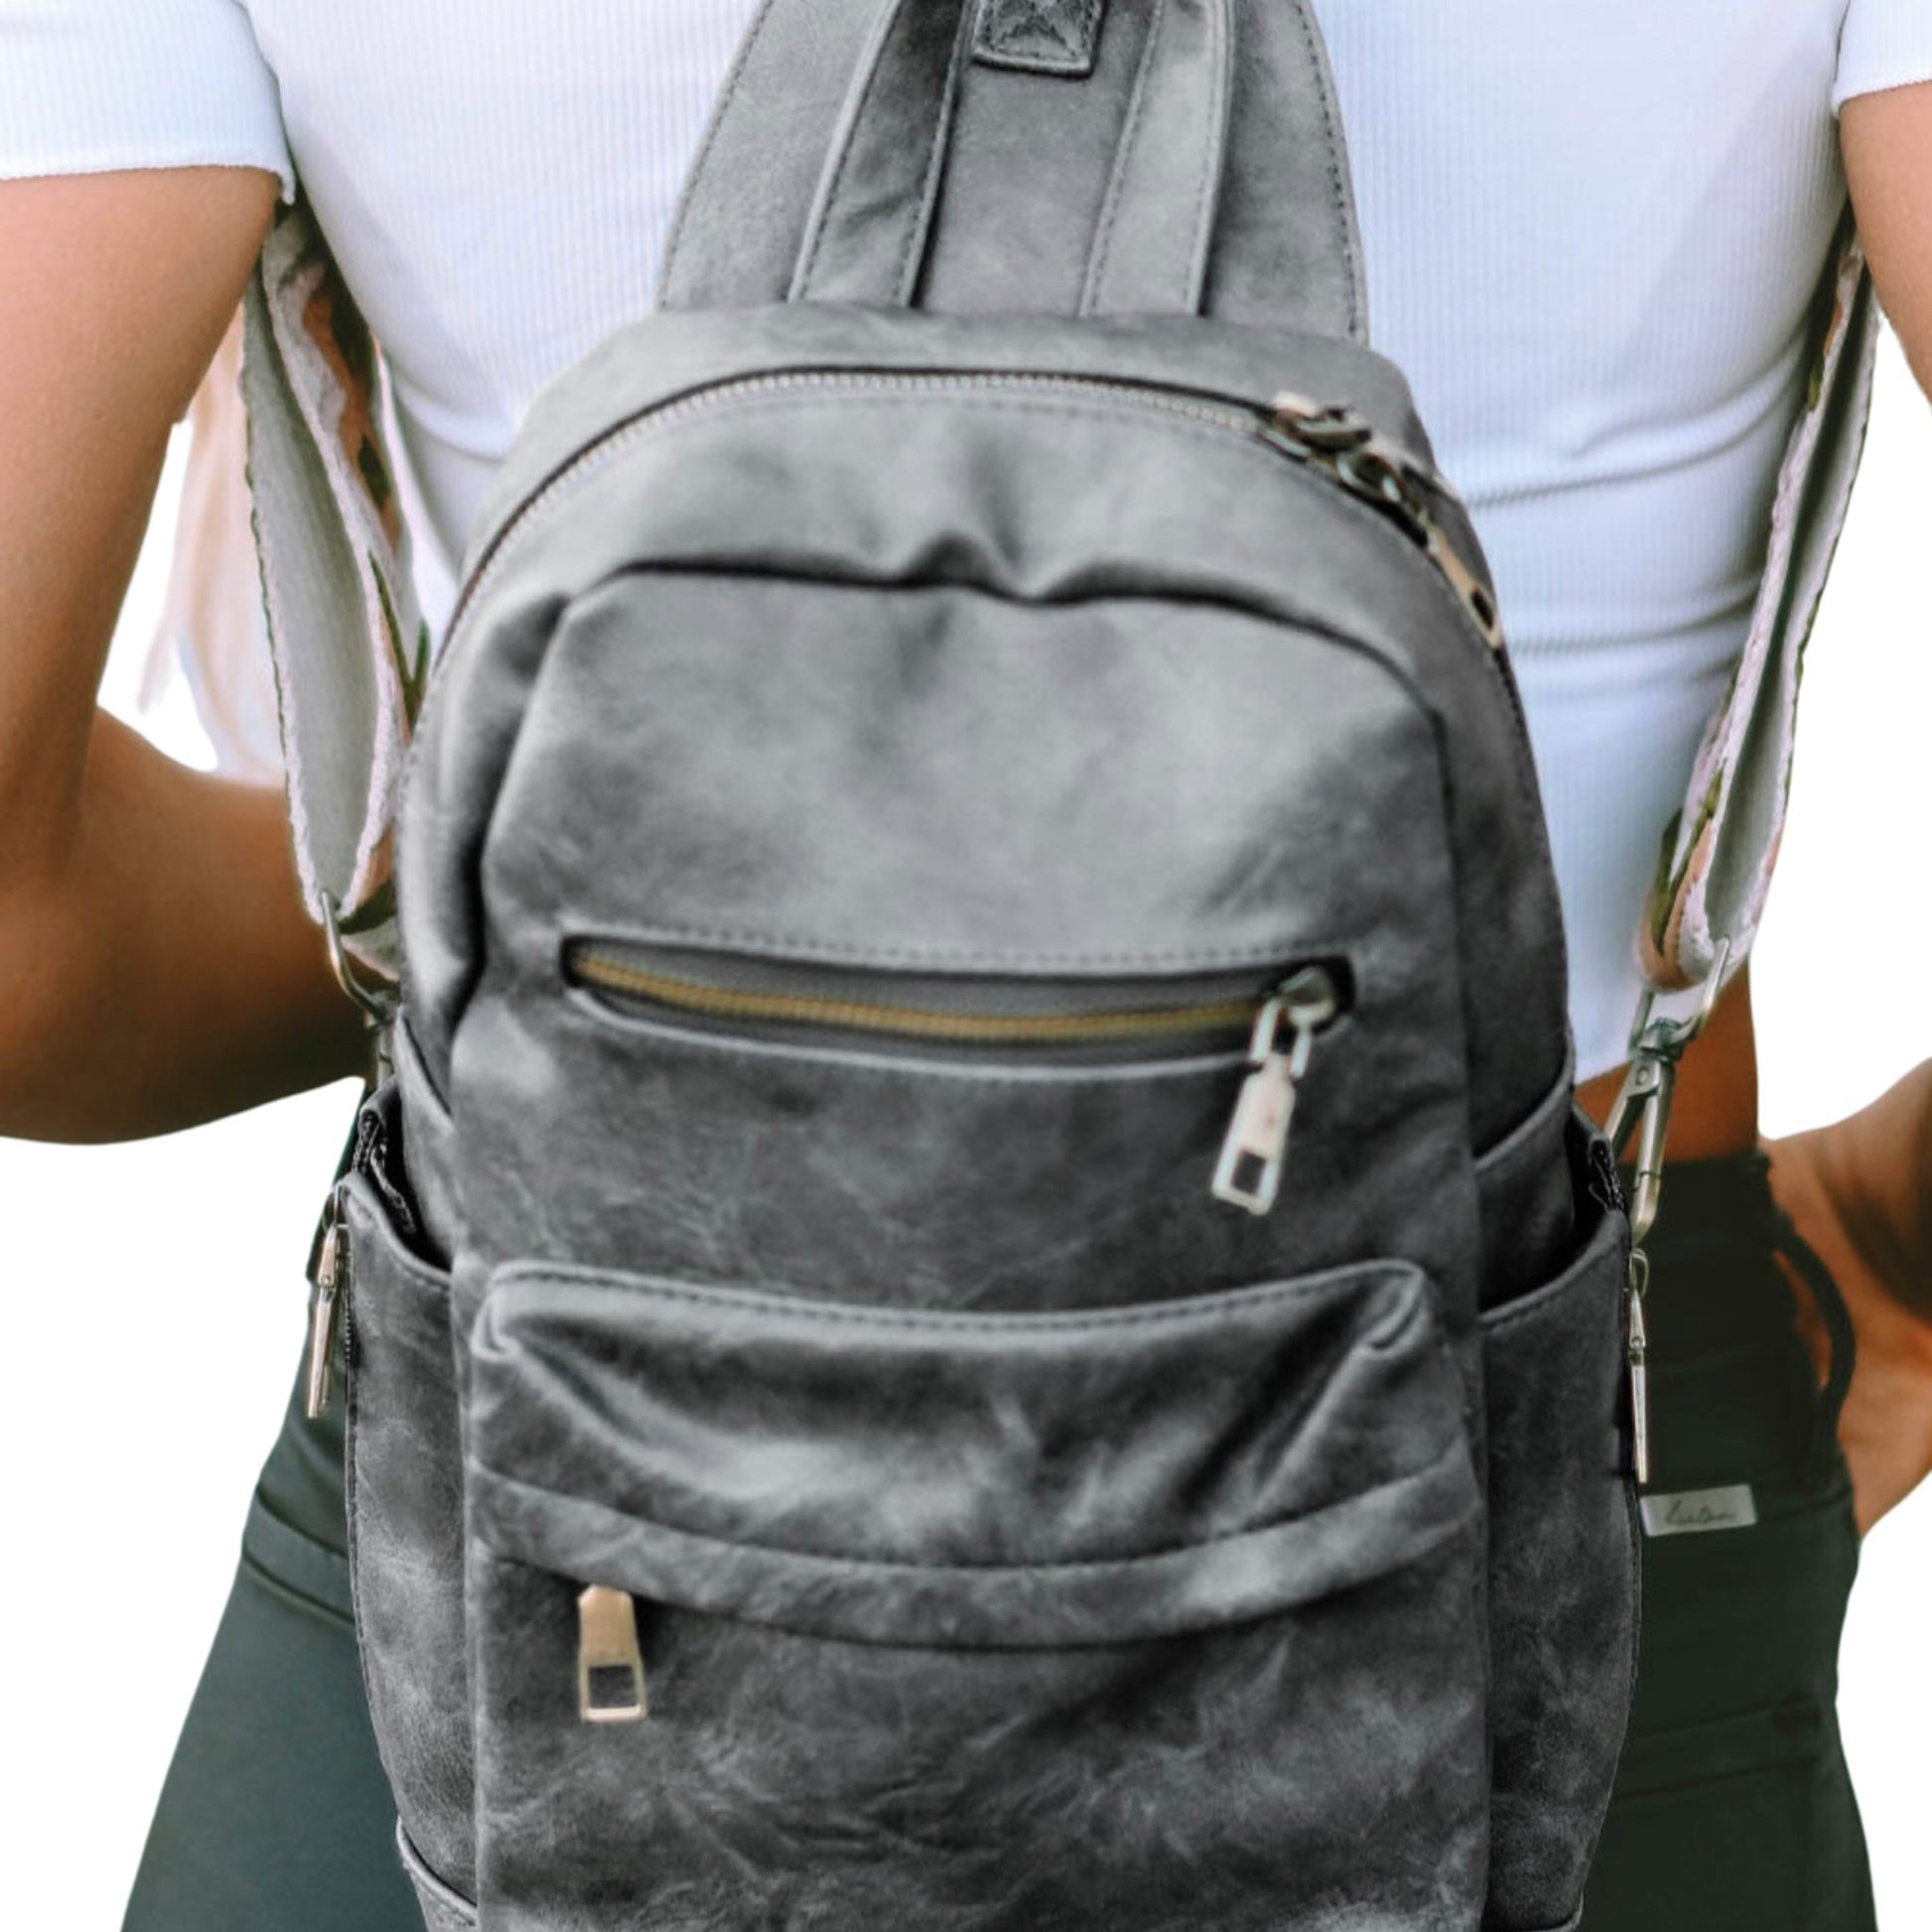 Gray double zipper backpack - Lavish life LLC 